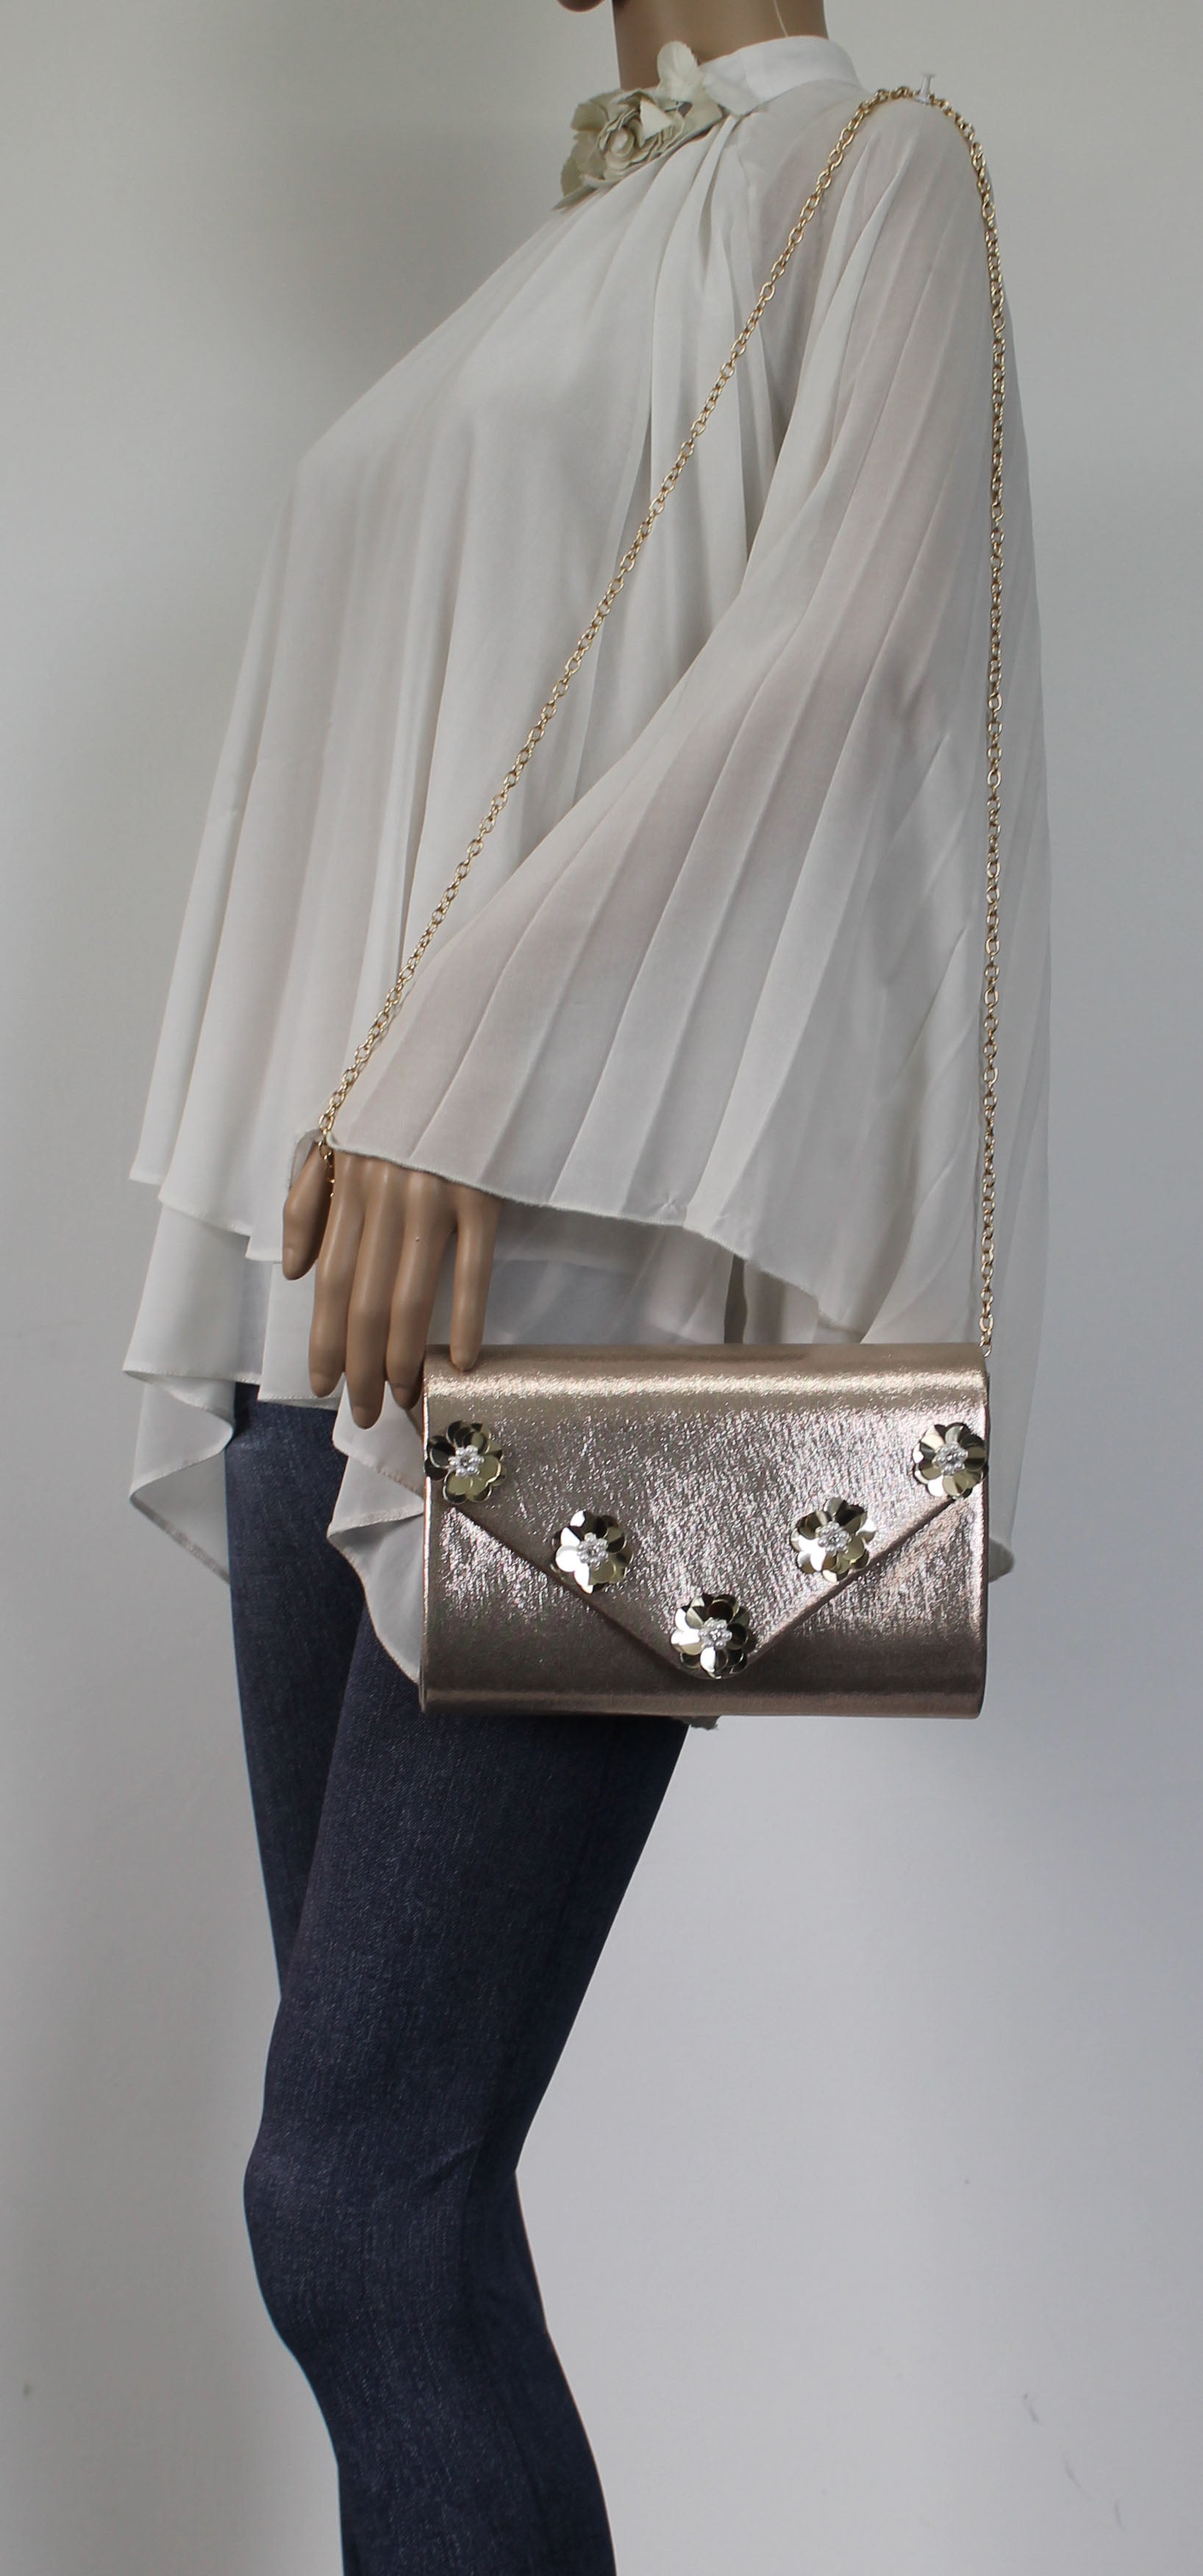 SWANKYSWANS Josie Clutch Bag Gold Cute Cheap Clutch Bag For Weddings School and Work